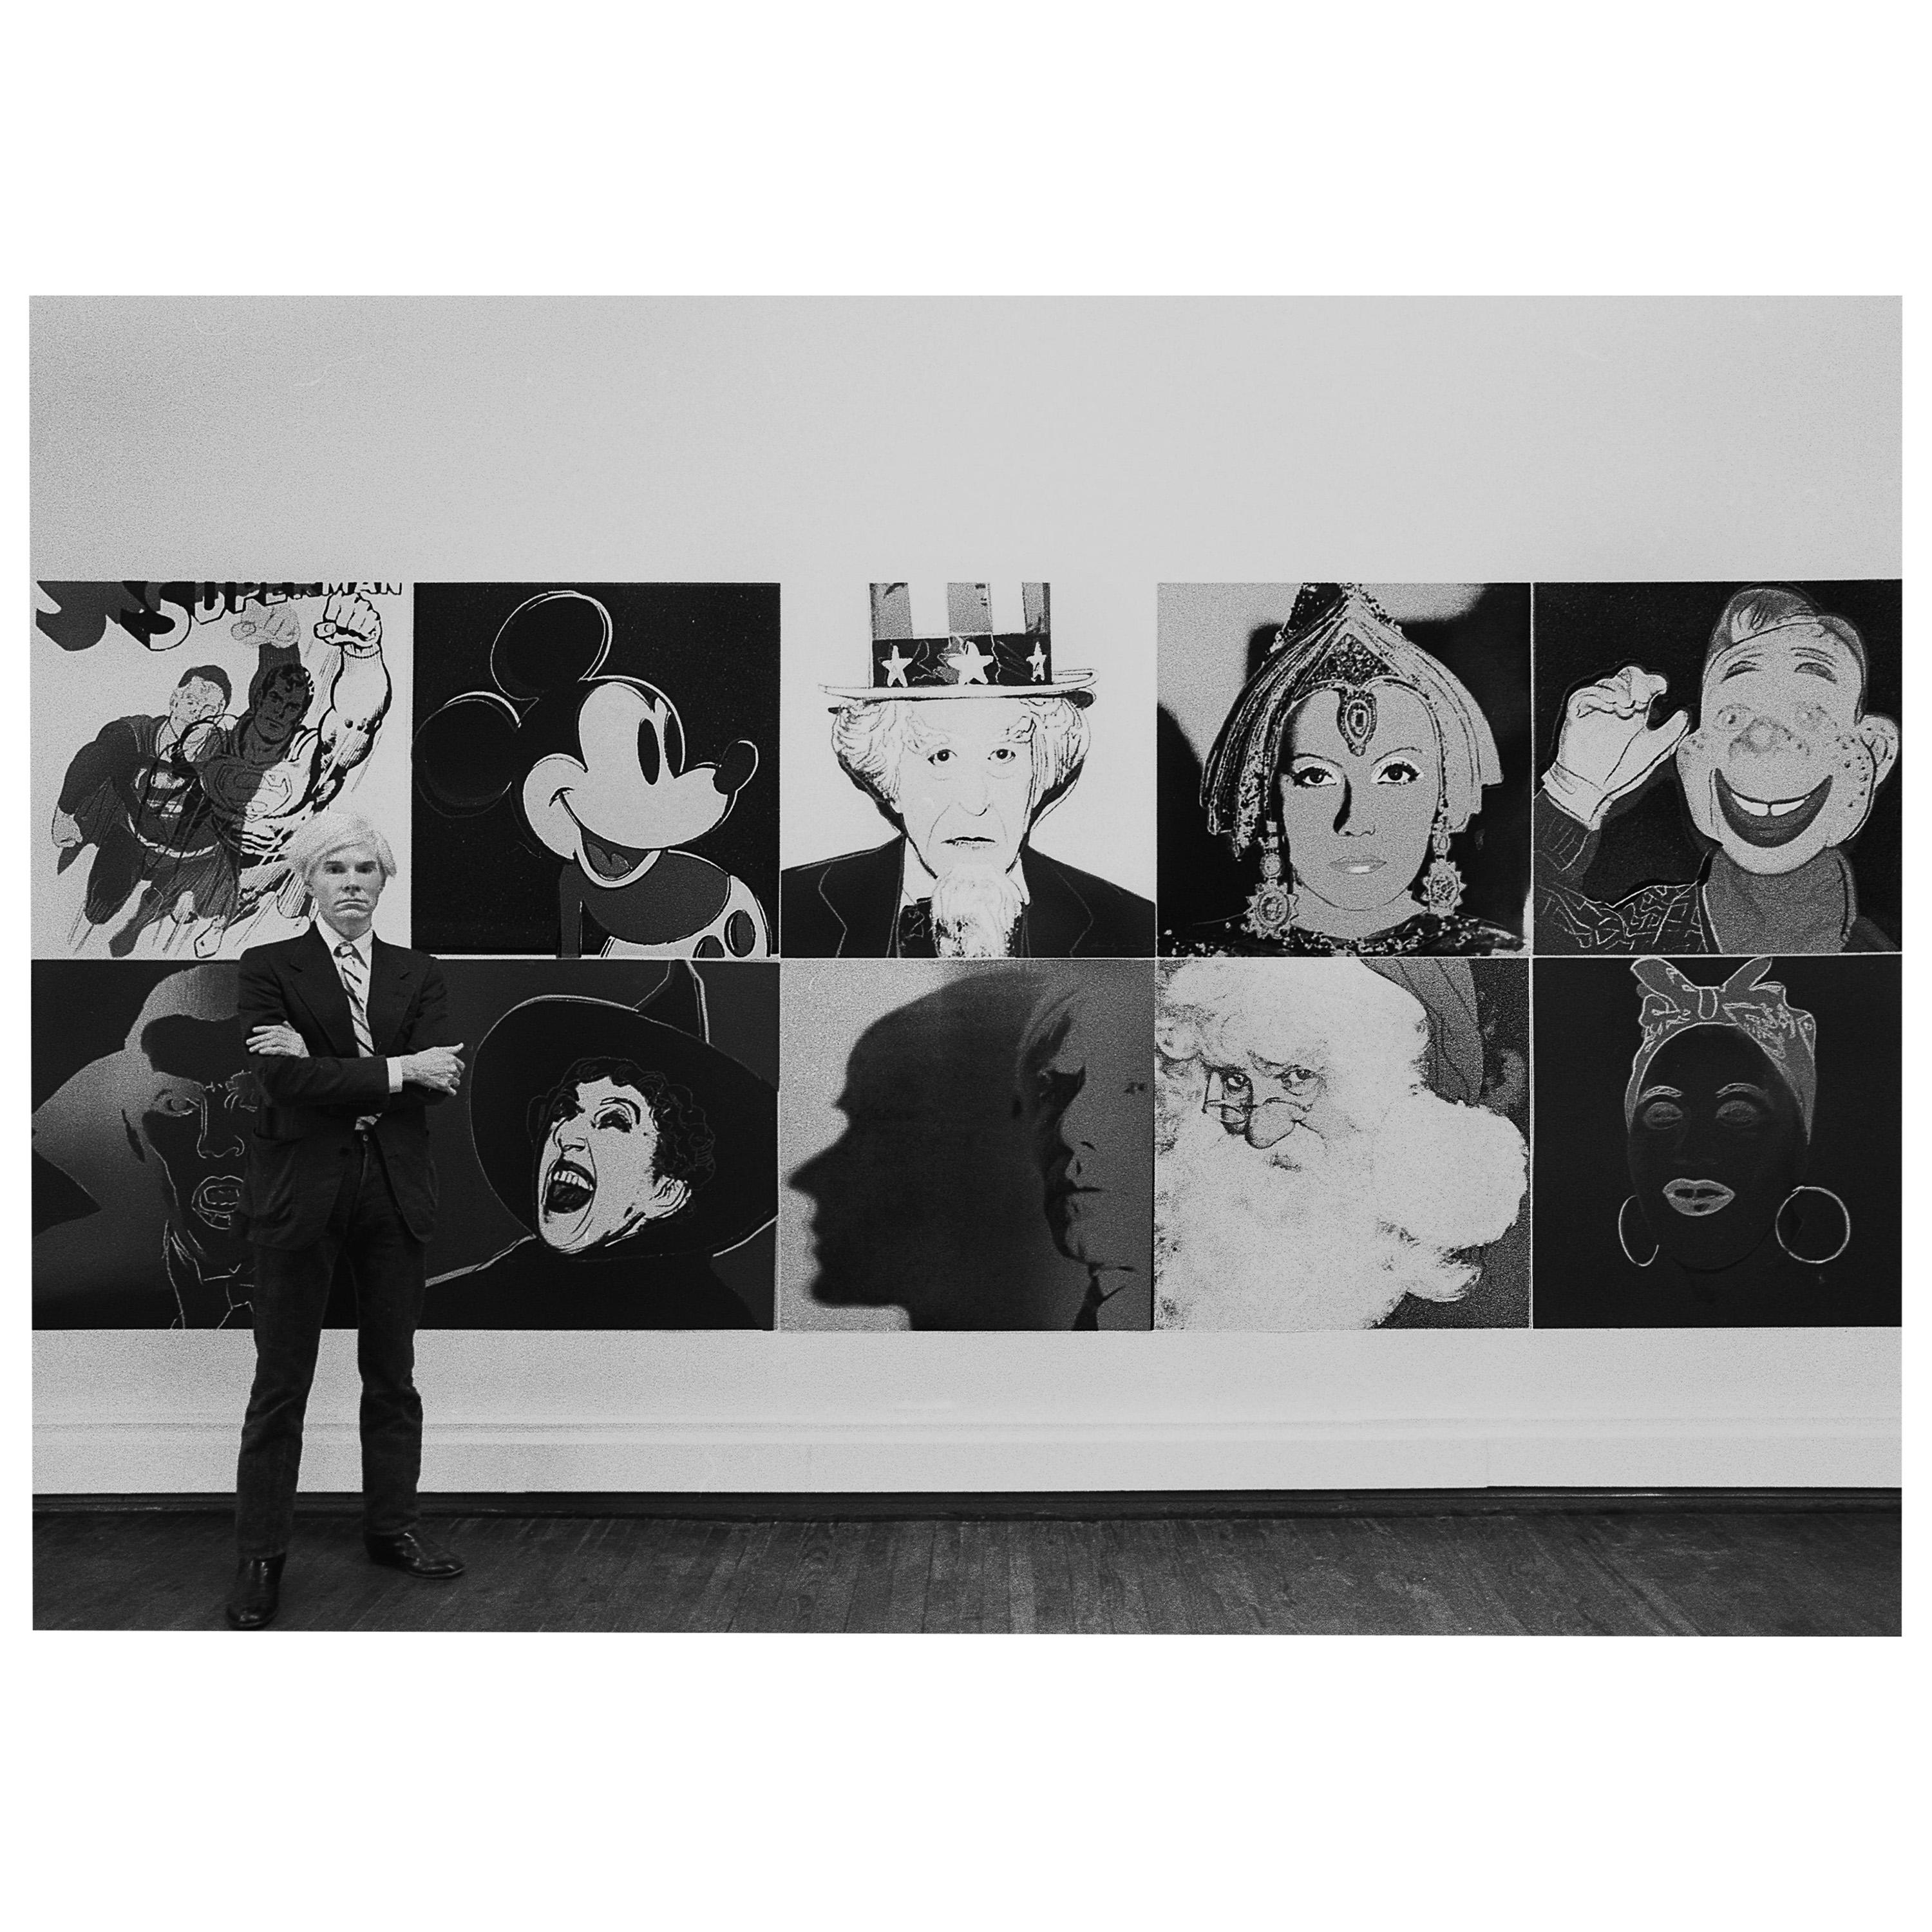 Robert Levin, "Andy Warhol at R. Feldman Gallery with Myths, 1981", USA, 2015